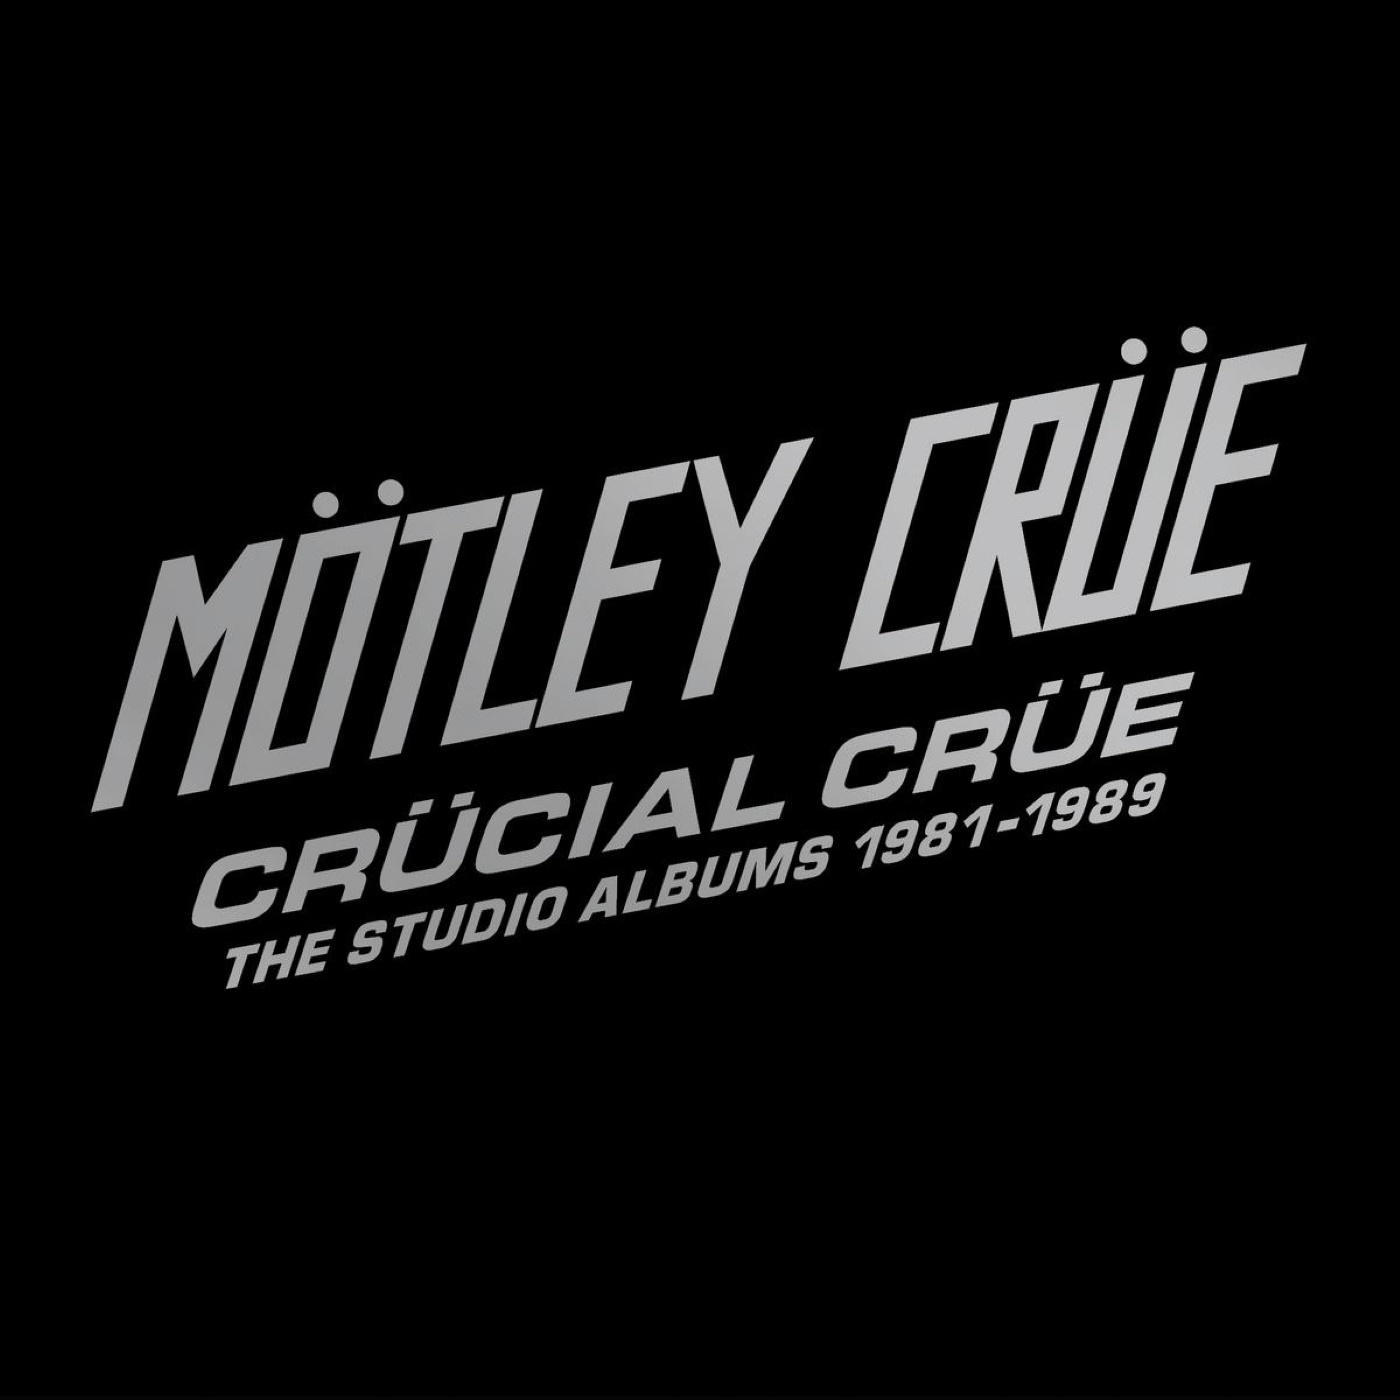 - Mötley THE - CRUCIAL ALBUMS - Crüe 1981-1989 CRUE STUDIO (Vinyl)